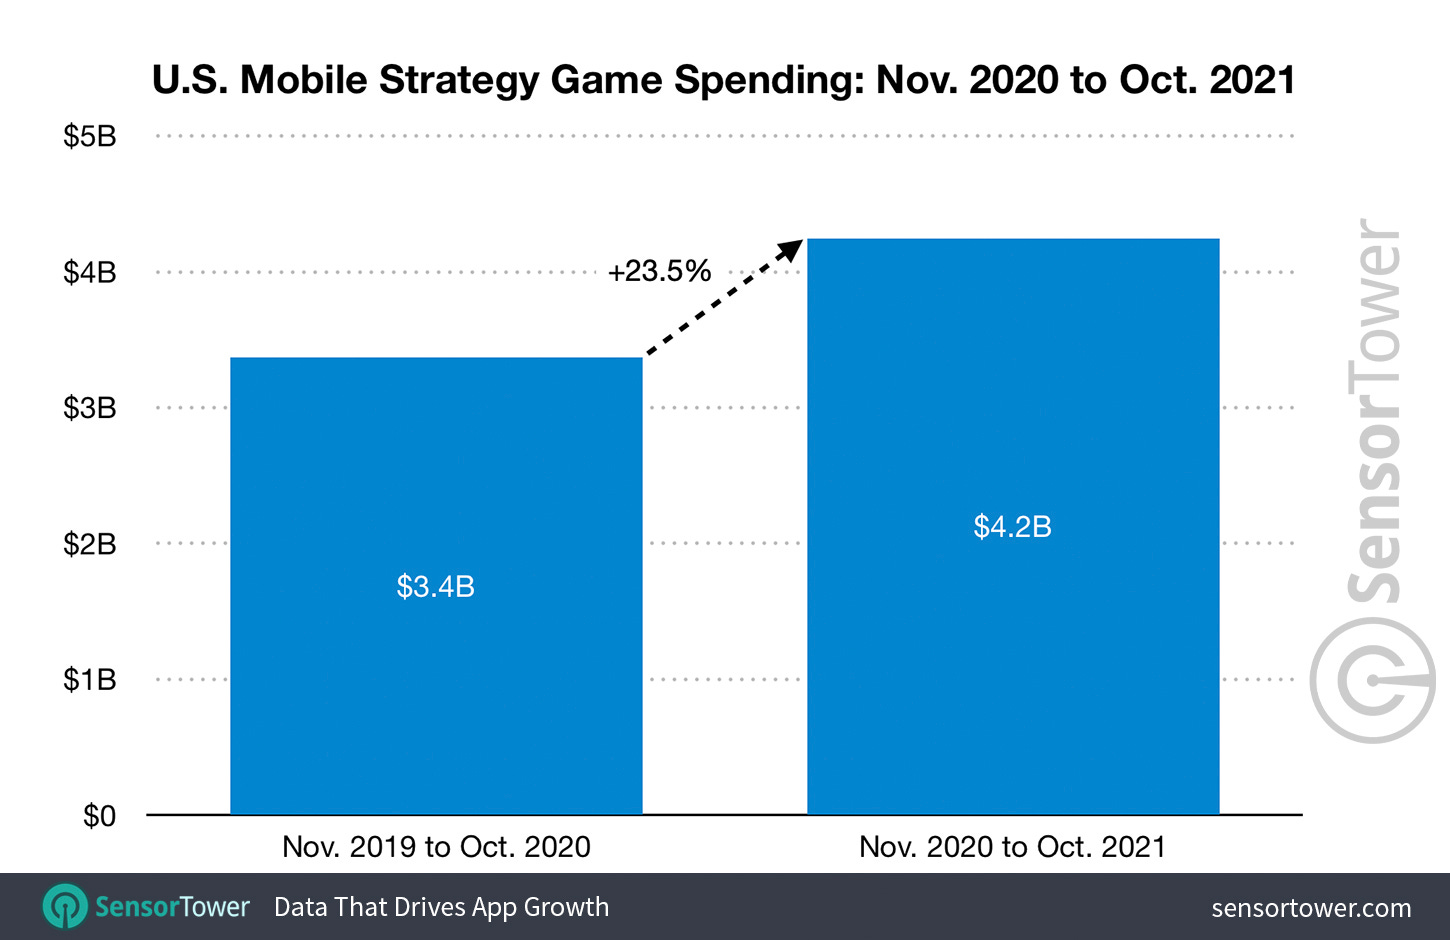 U.S. Mobile Strategy Game Spending: November 2020 to October 2021